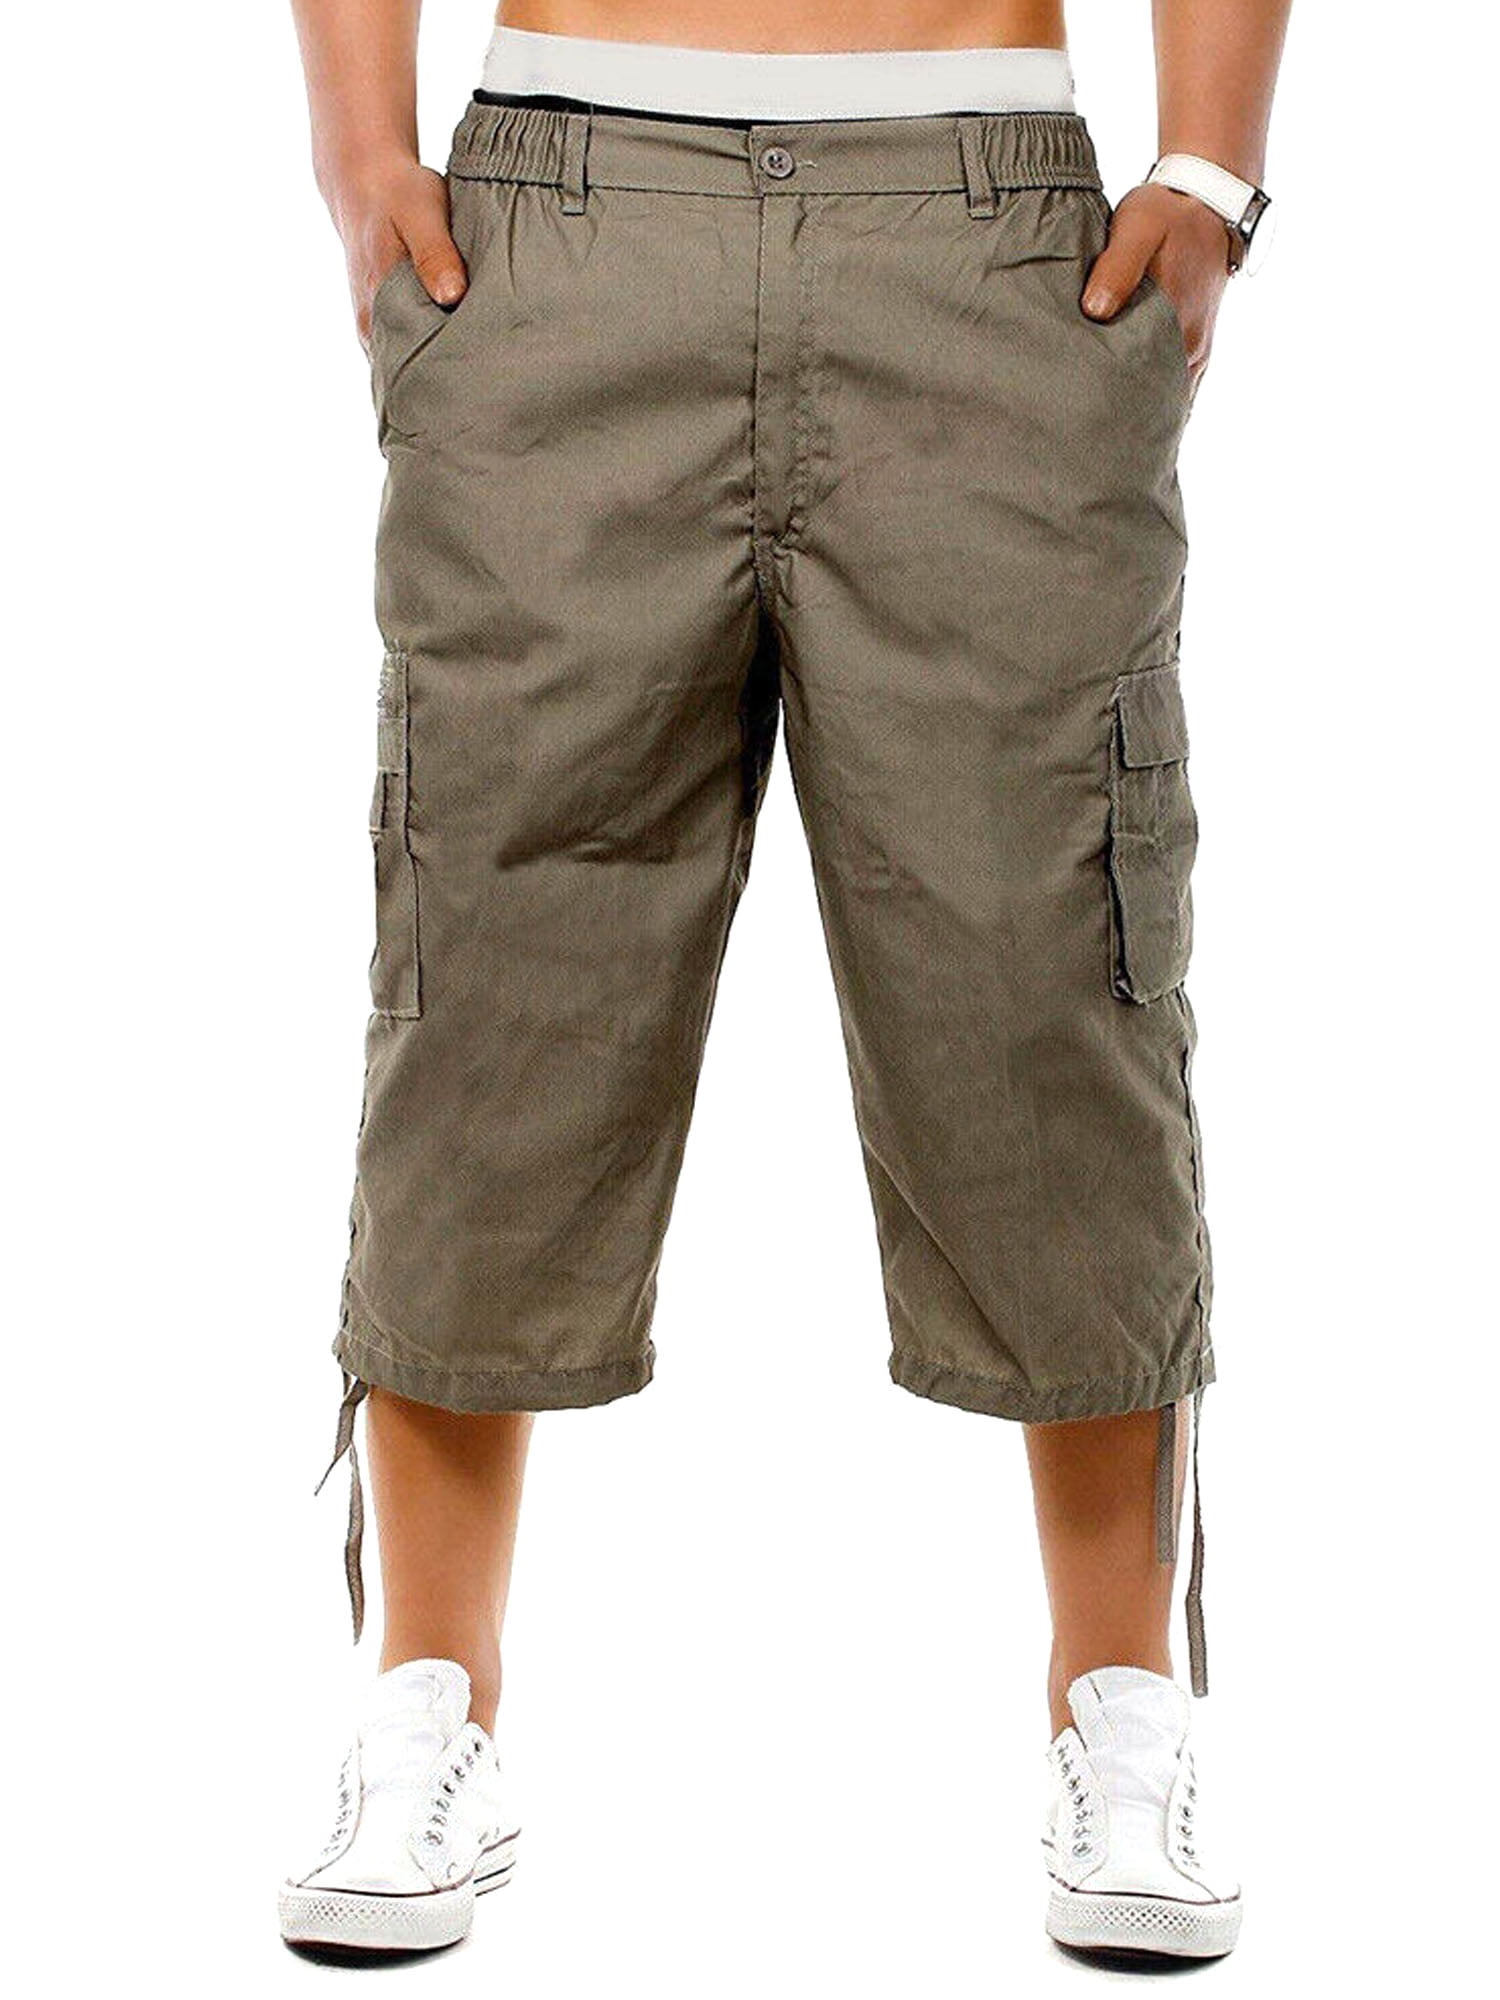 Chickle Mens Straight-Fit Cotton 3/4 Cargo Shorts M Khaki